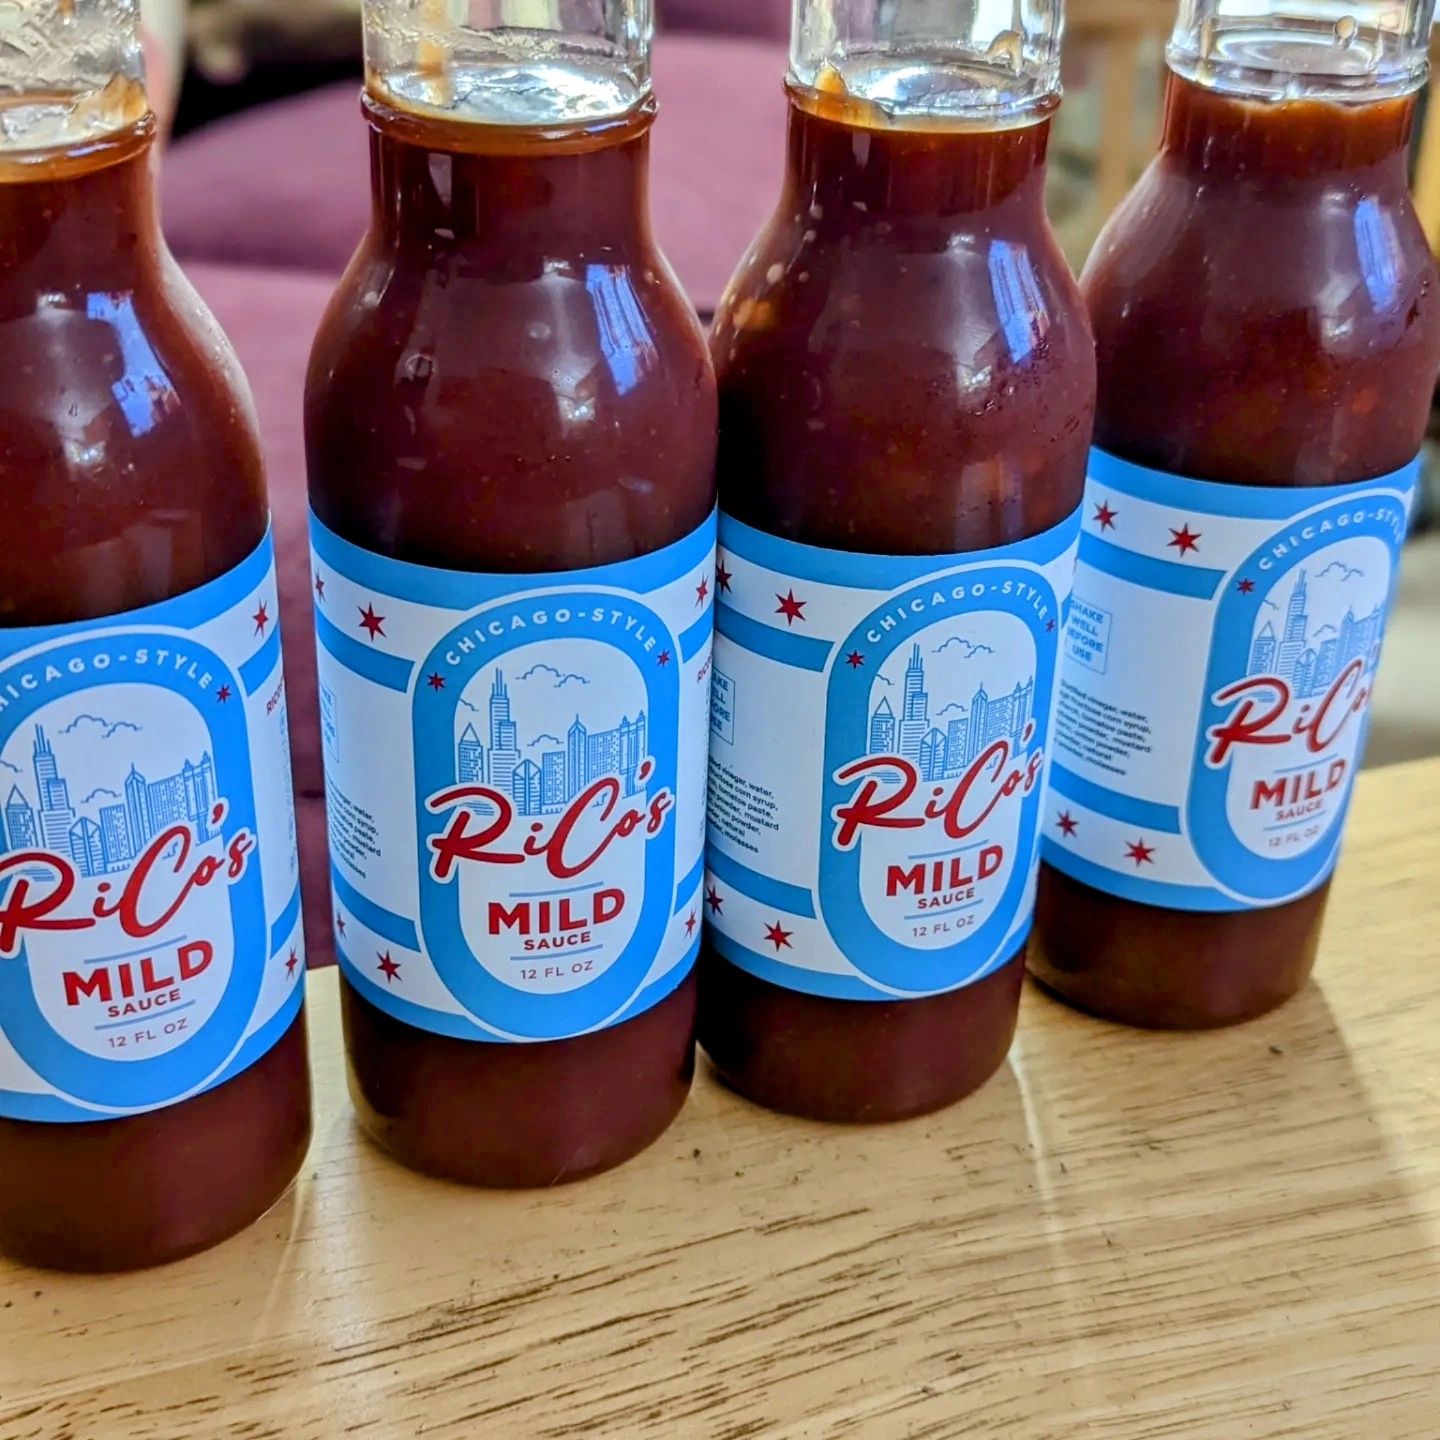 RiCo's Mild Sauce (2pk/12oz. per bottle), Chicago-Style Mild Sauce